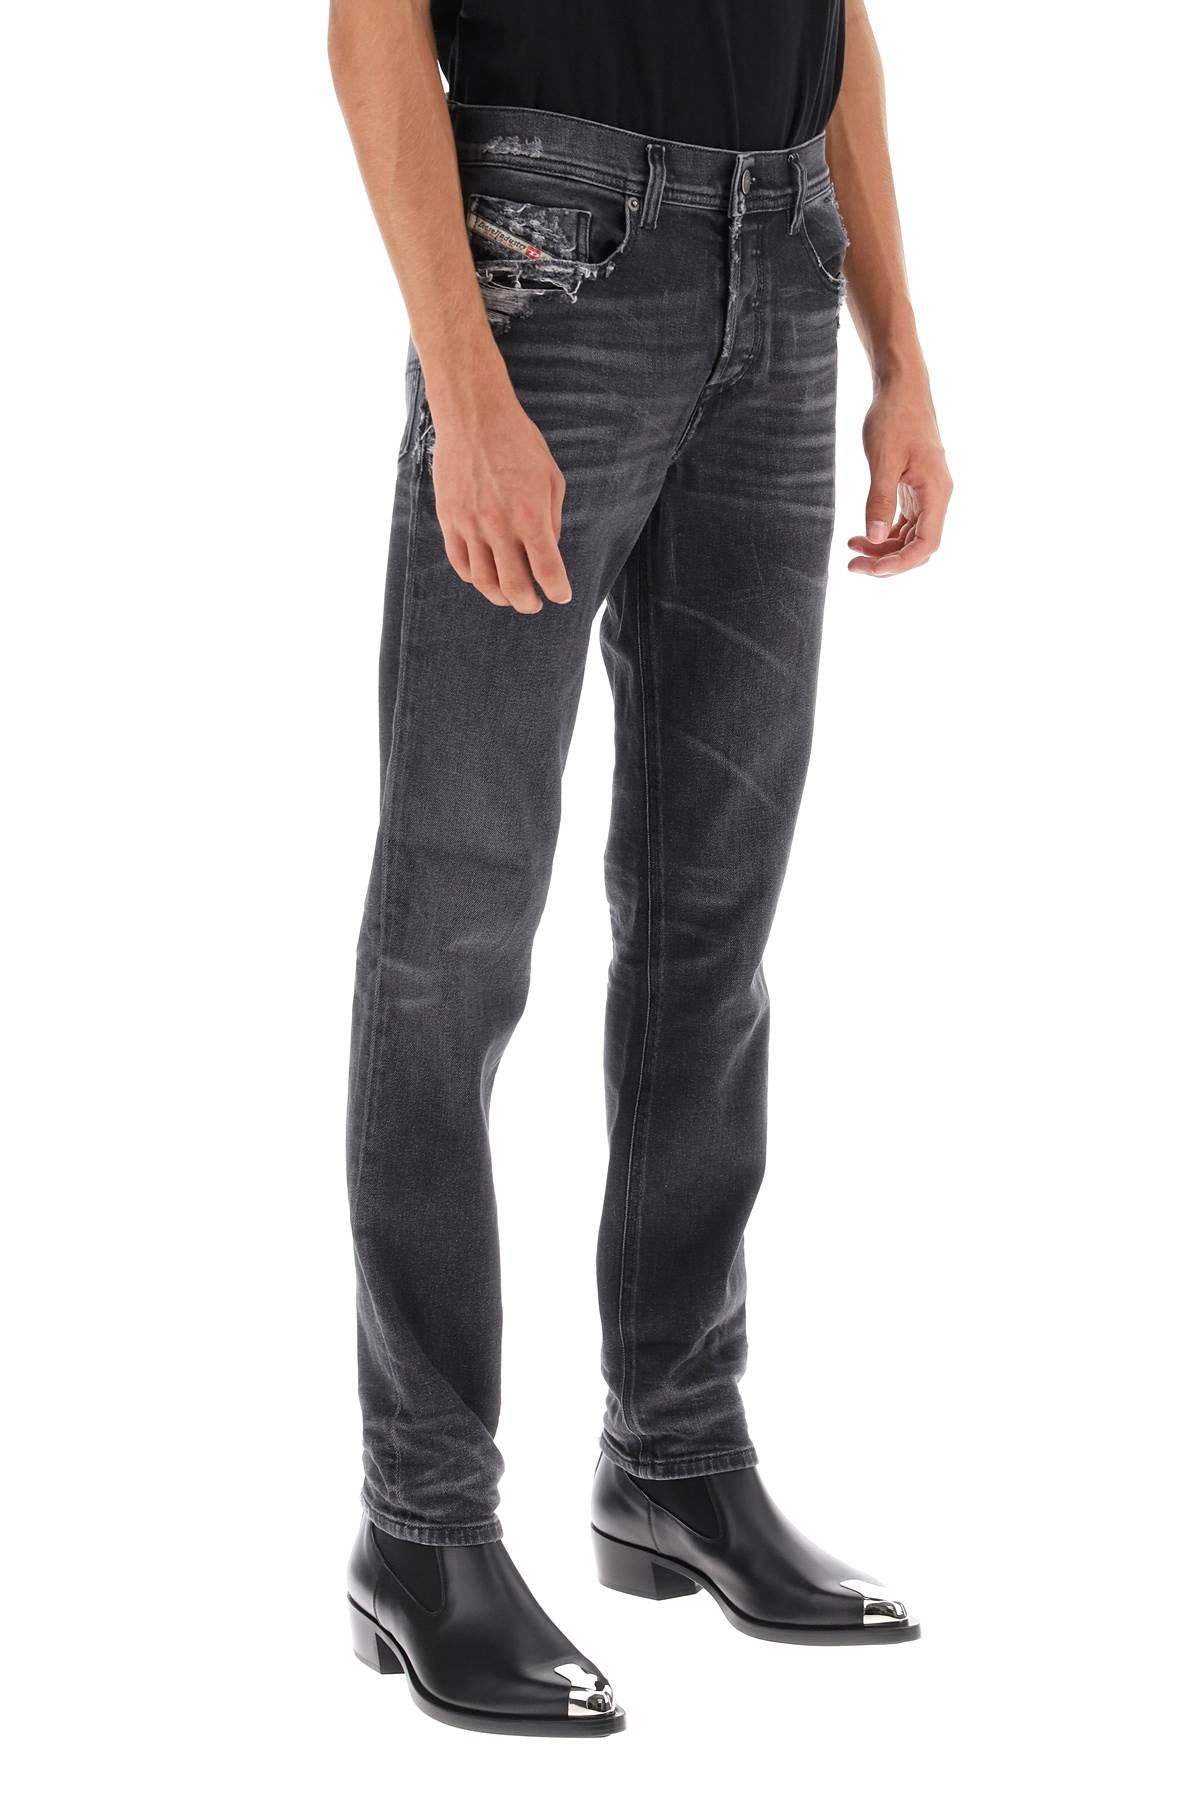 Diesel Diesel 023 d-finitive regular fit jeans